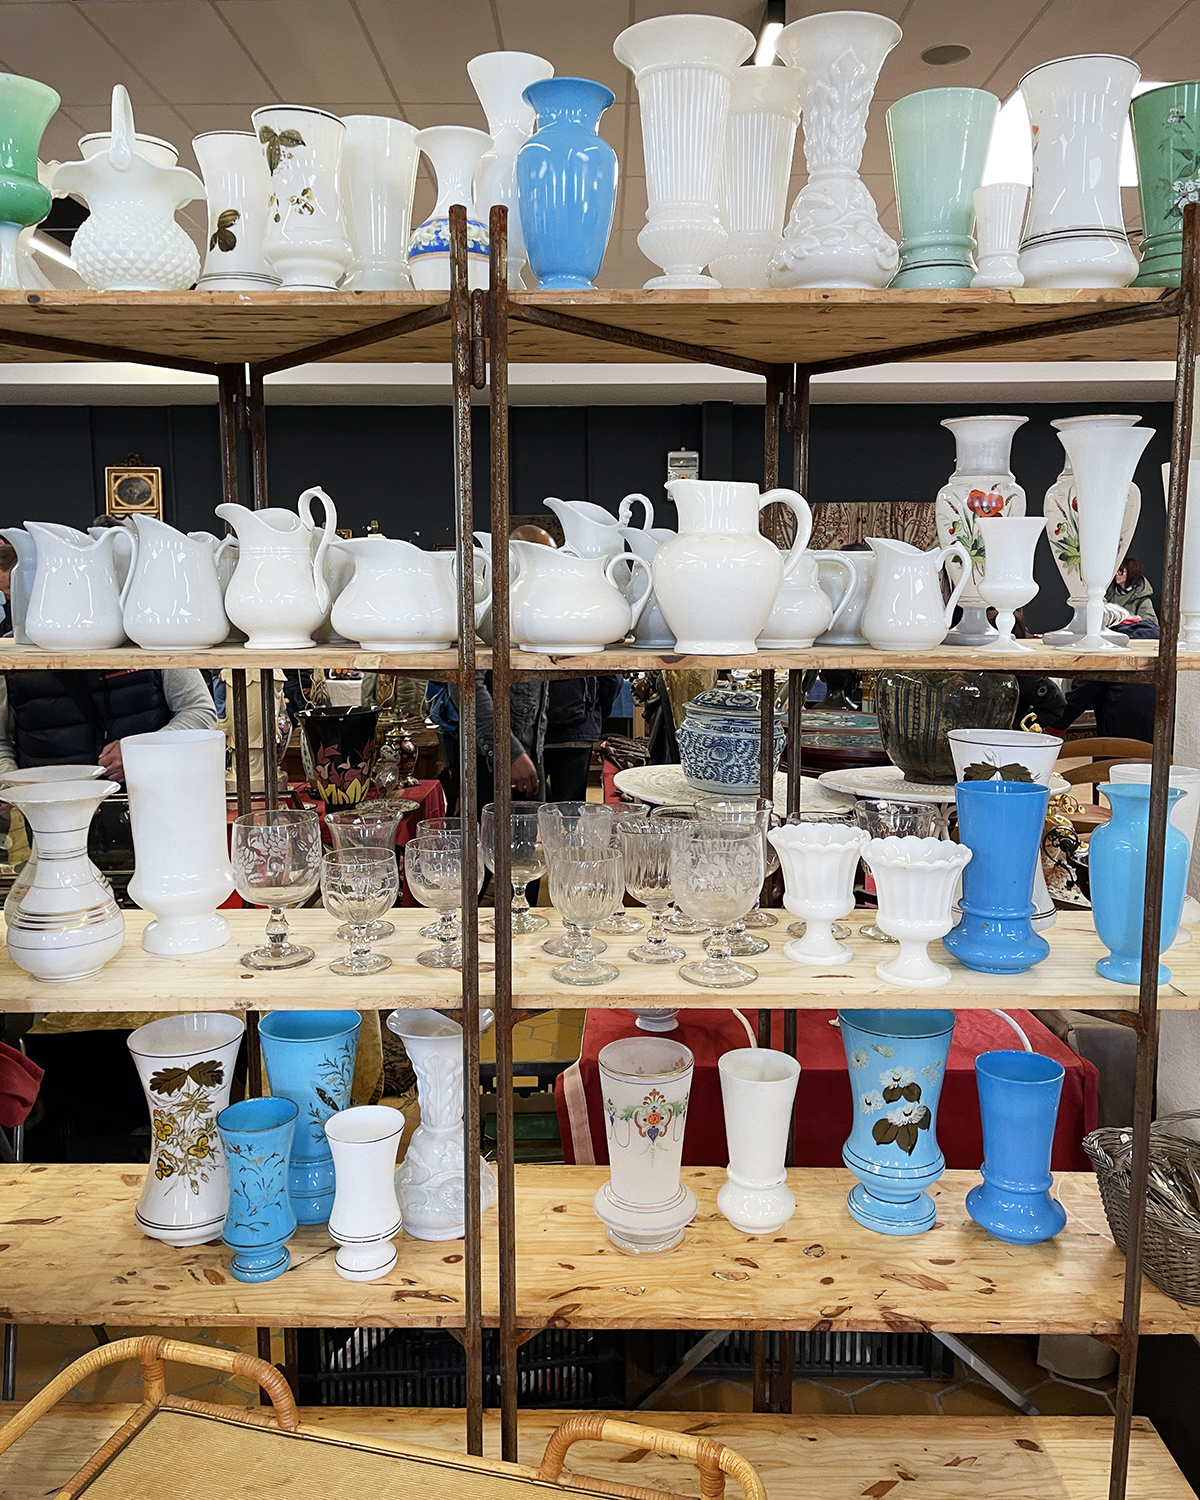 Glassware at a flea market